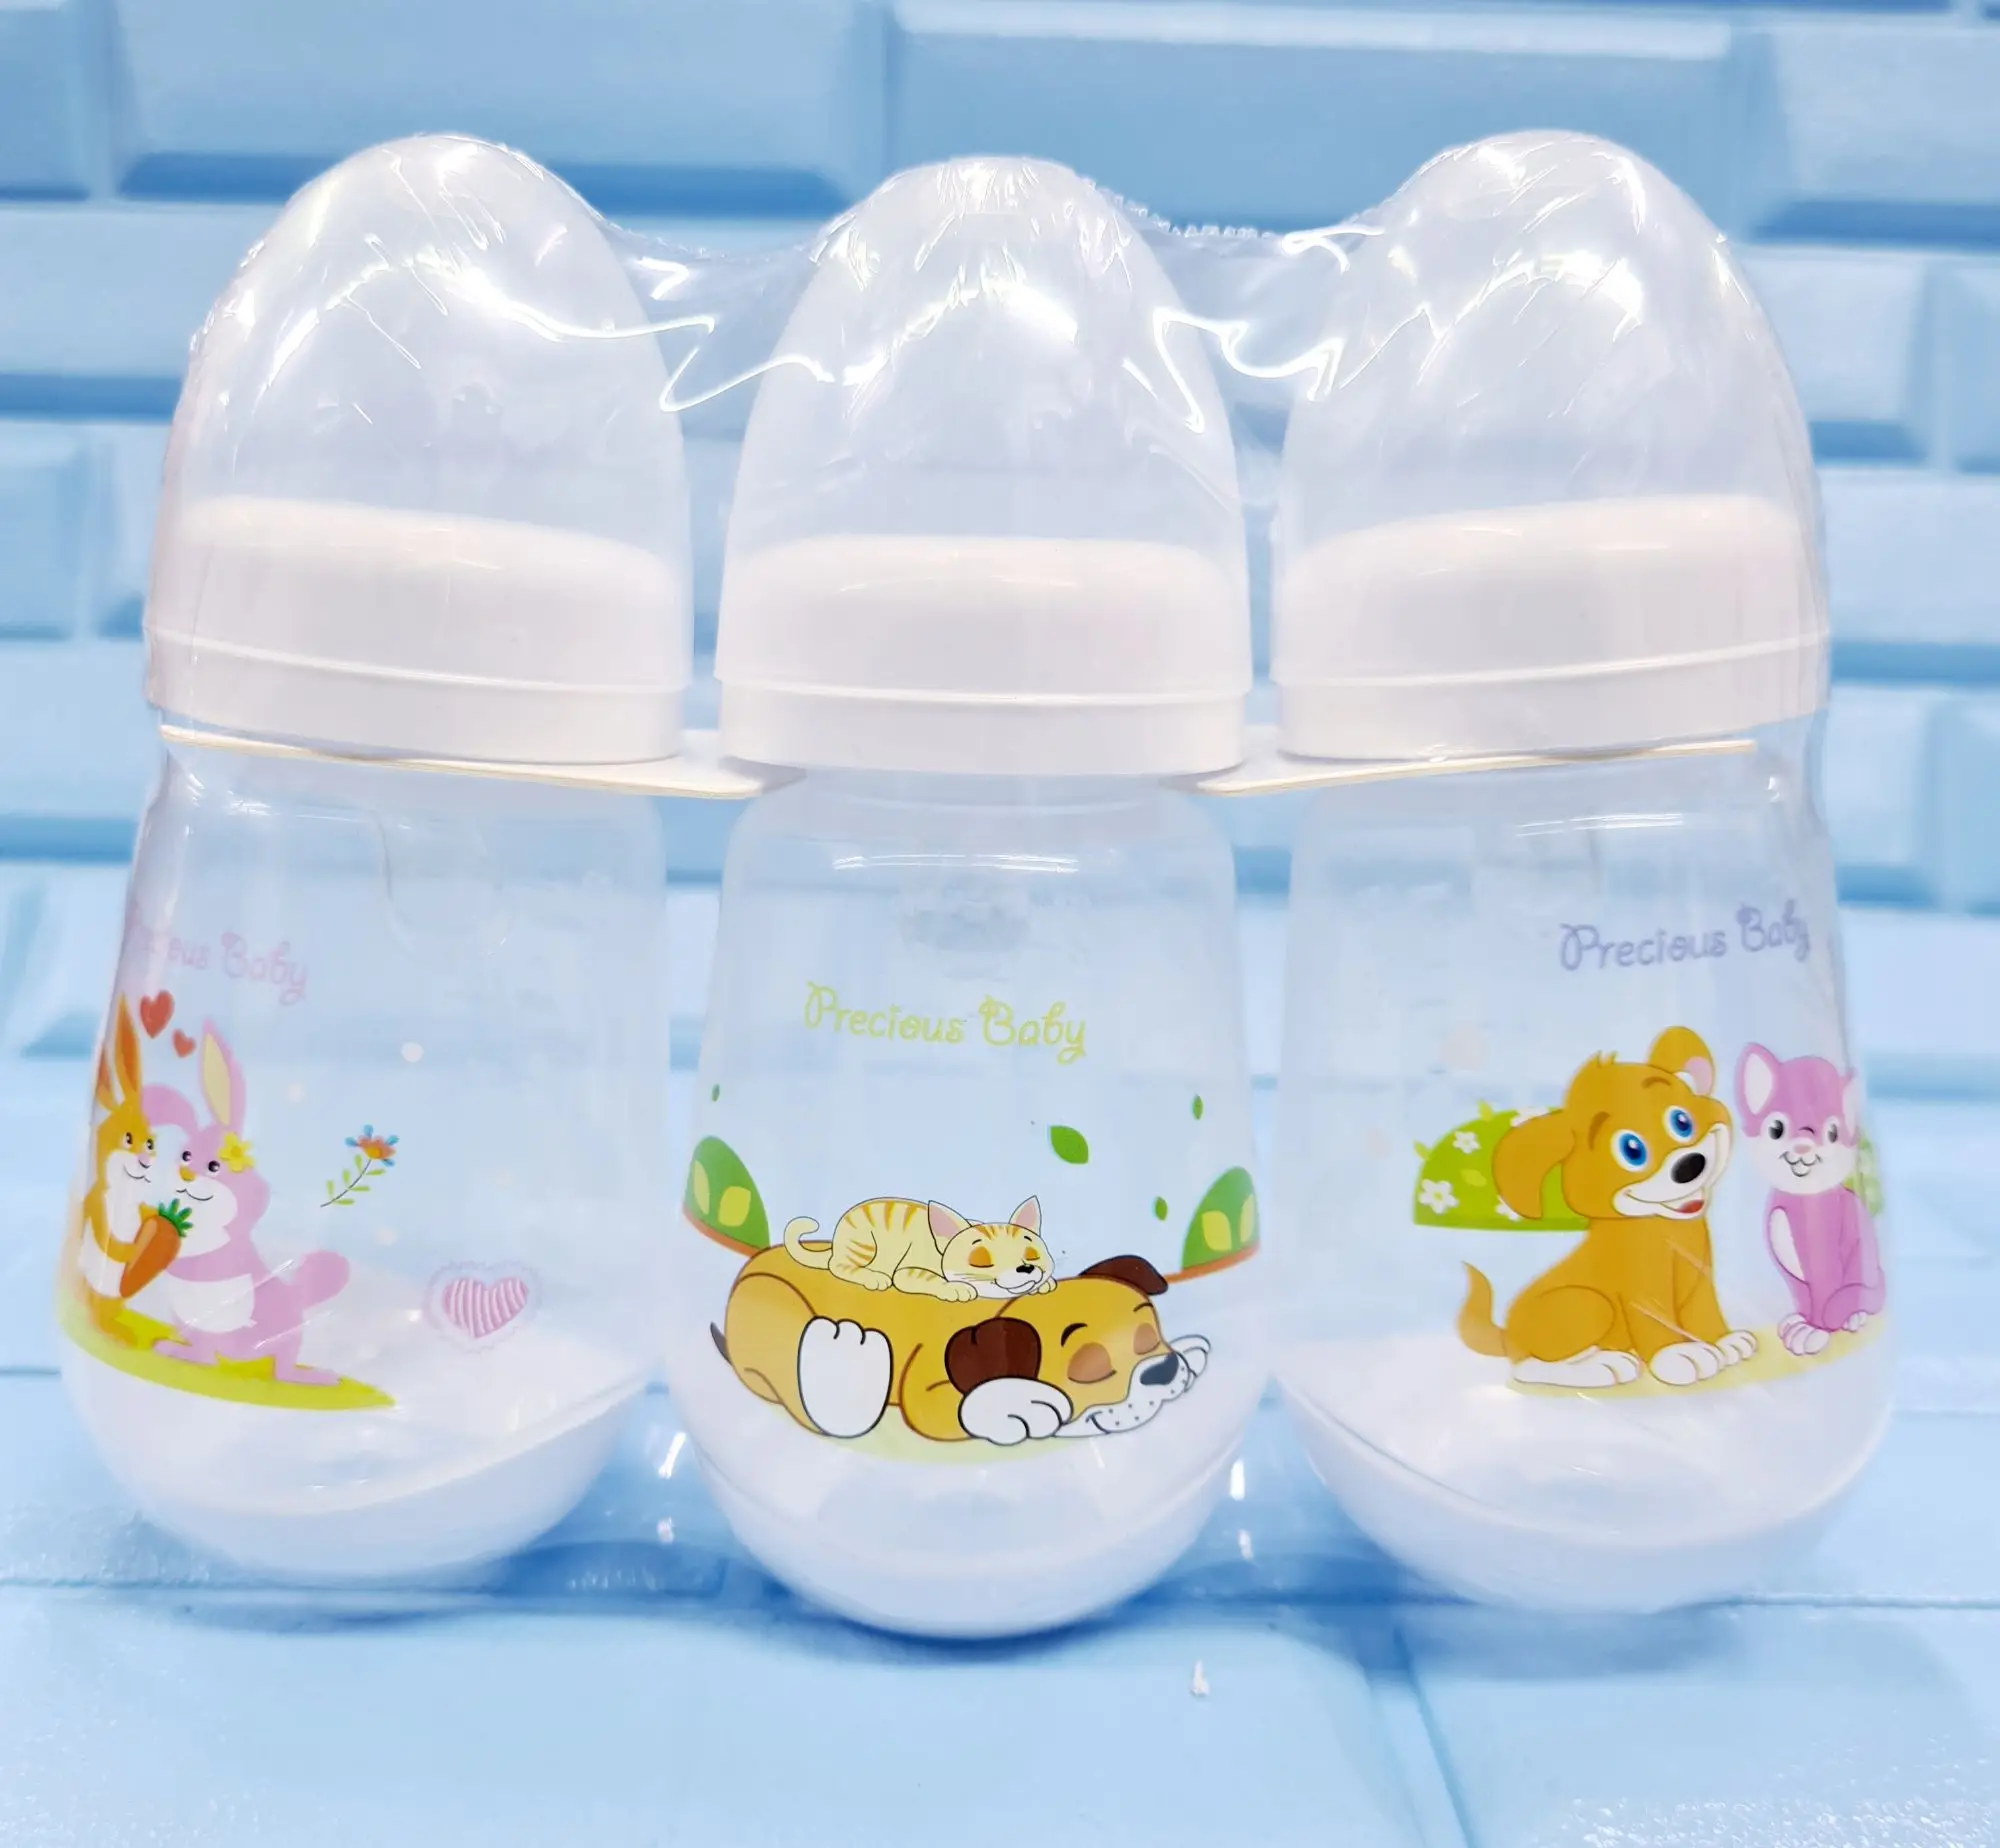 Precious Baby Regular Feeding Bottle 5oz 3's (2)